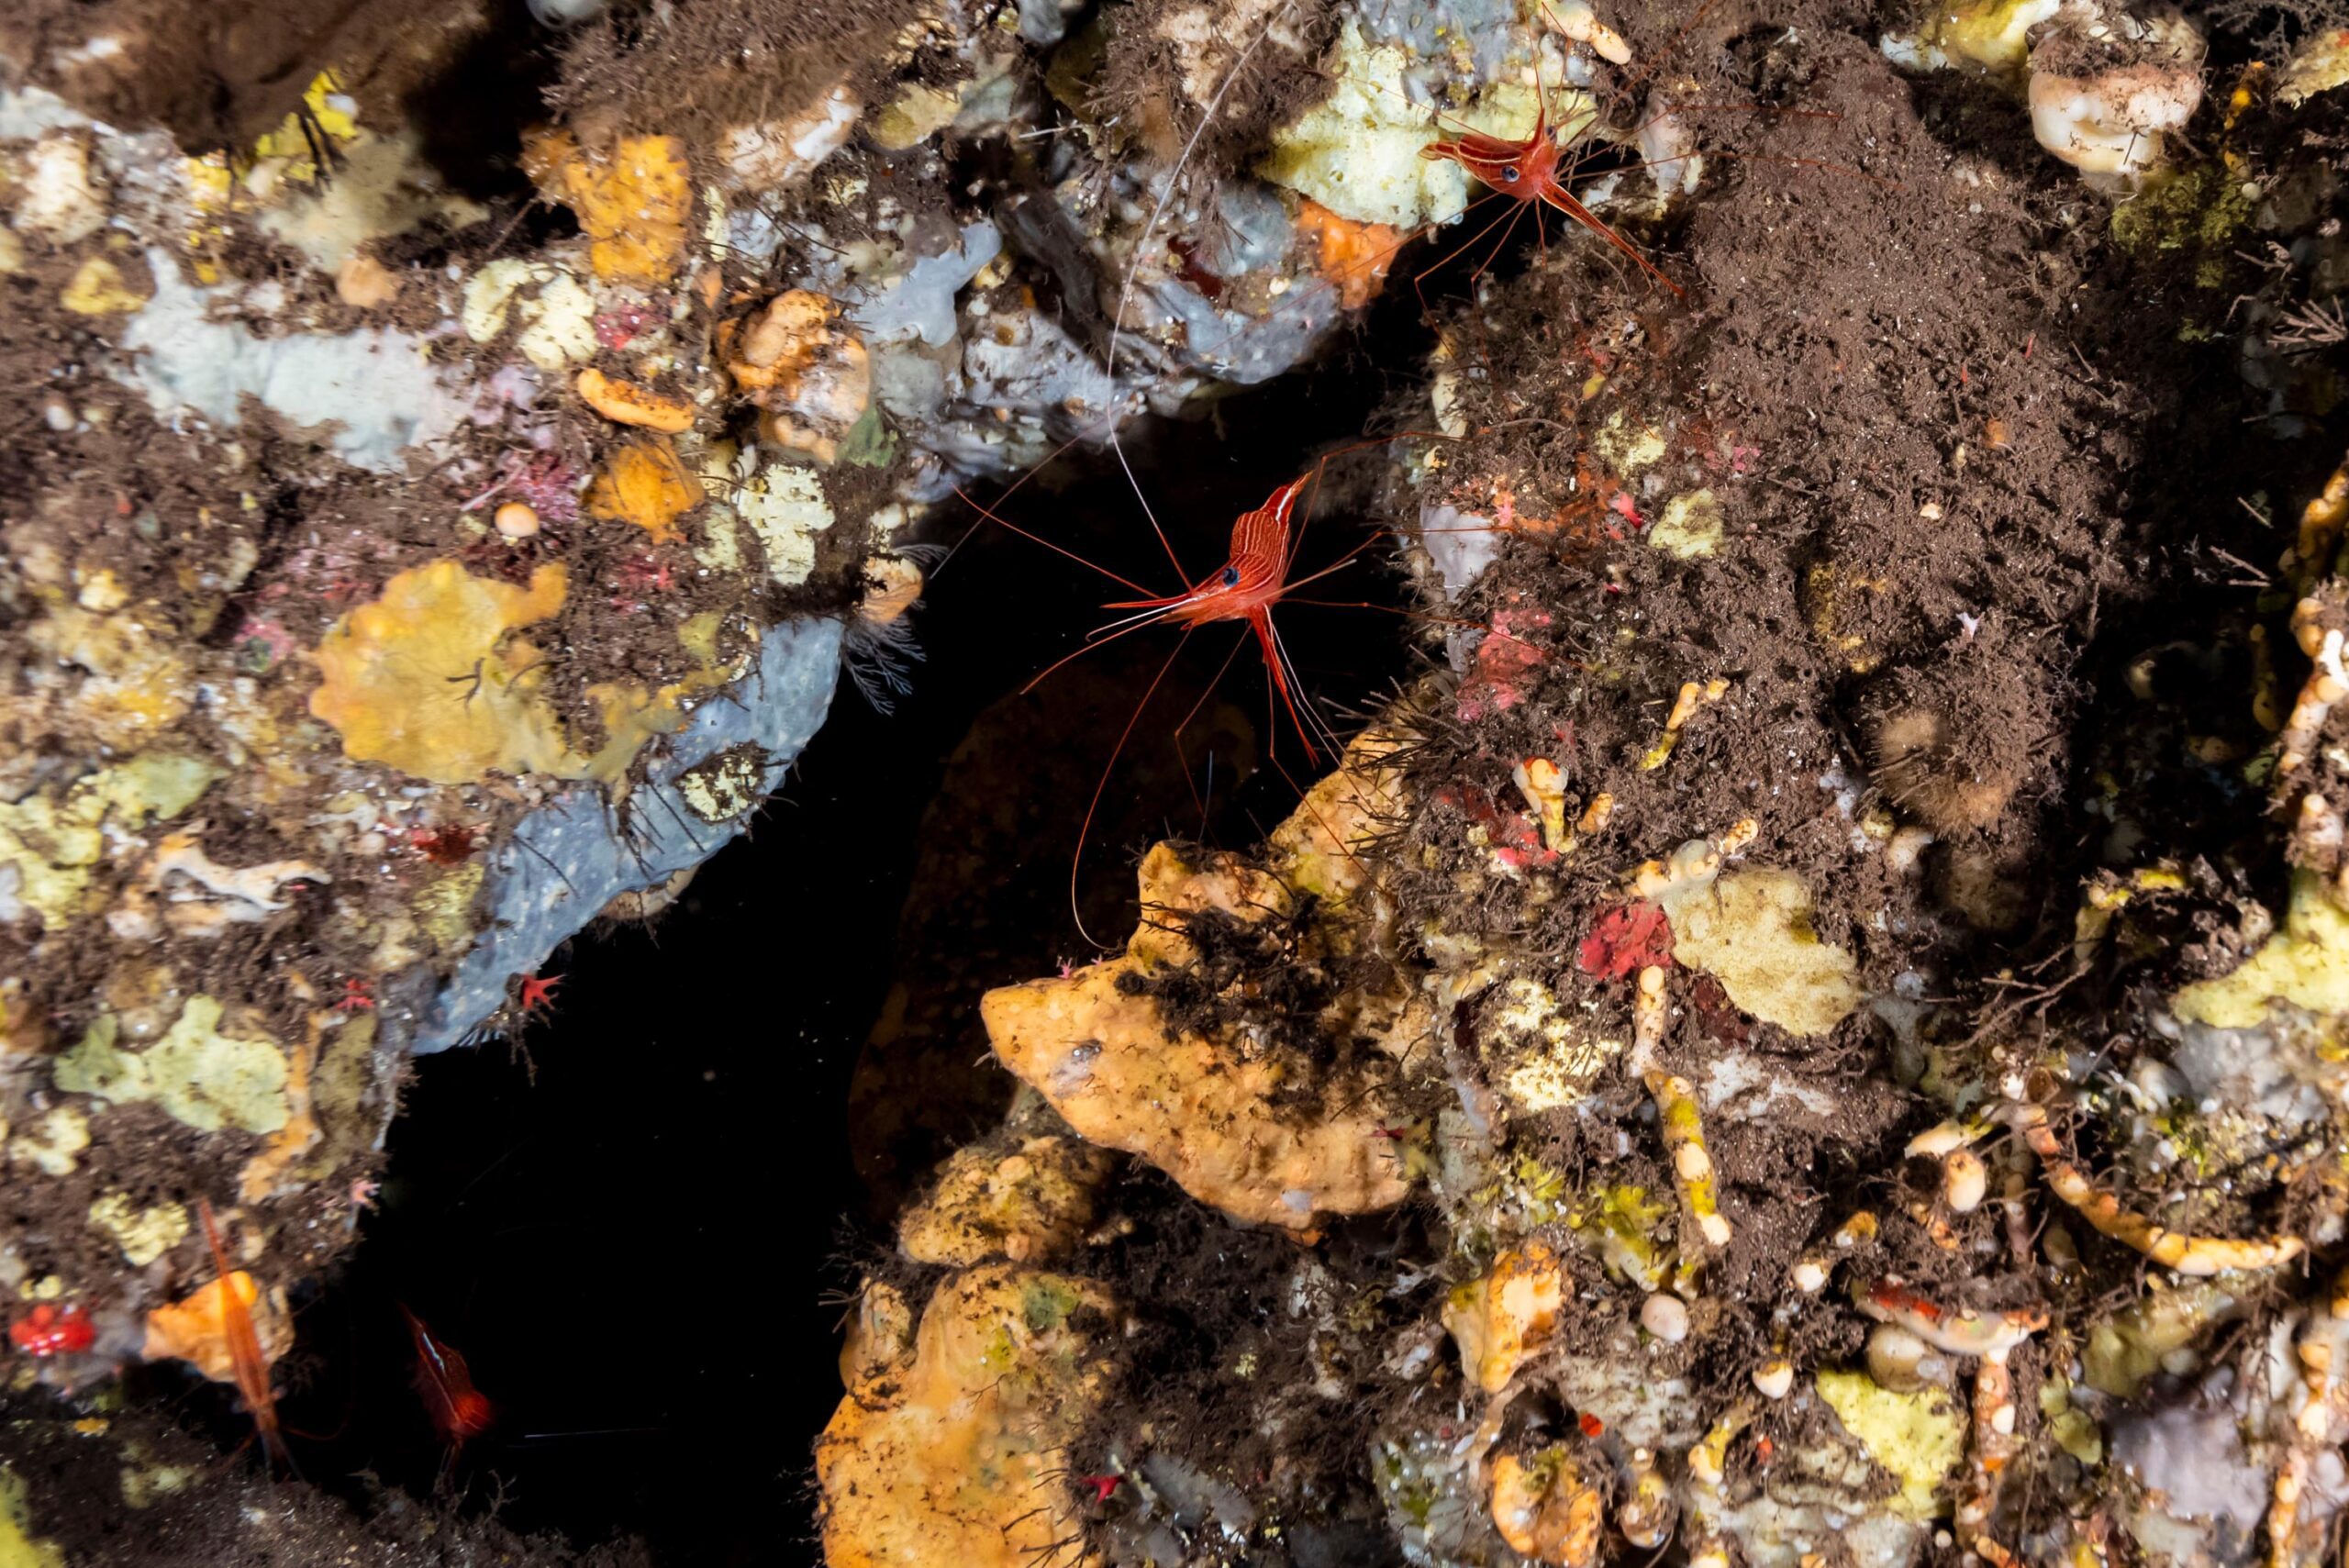 A shrimp at a mesophotic depth.